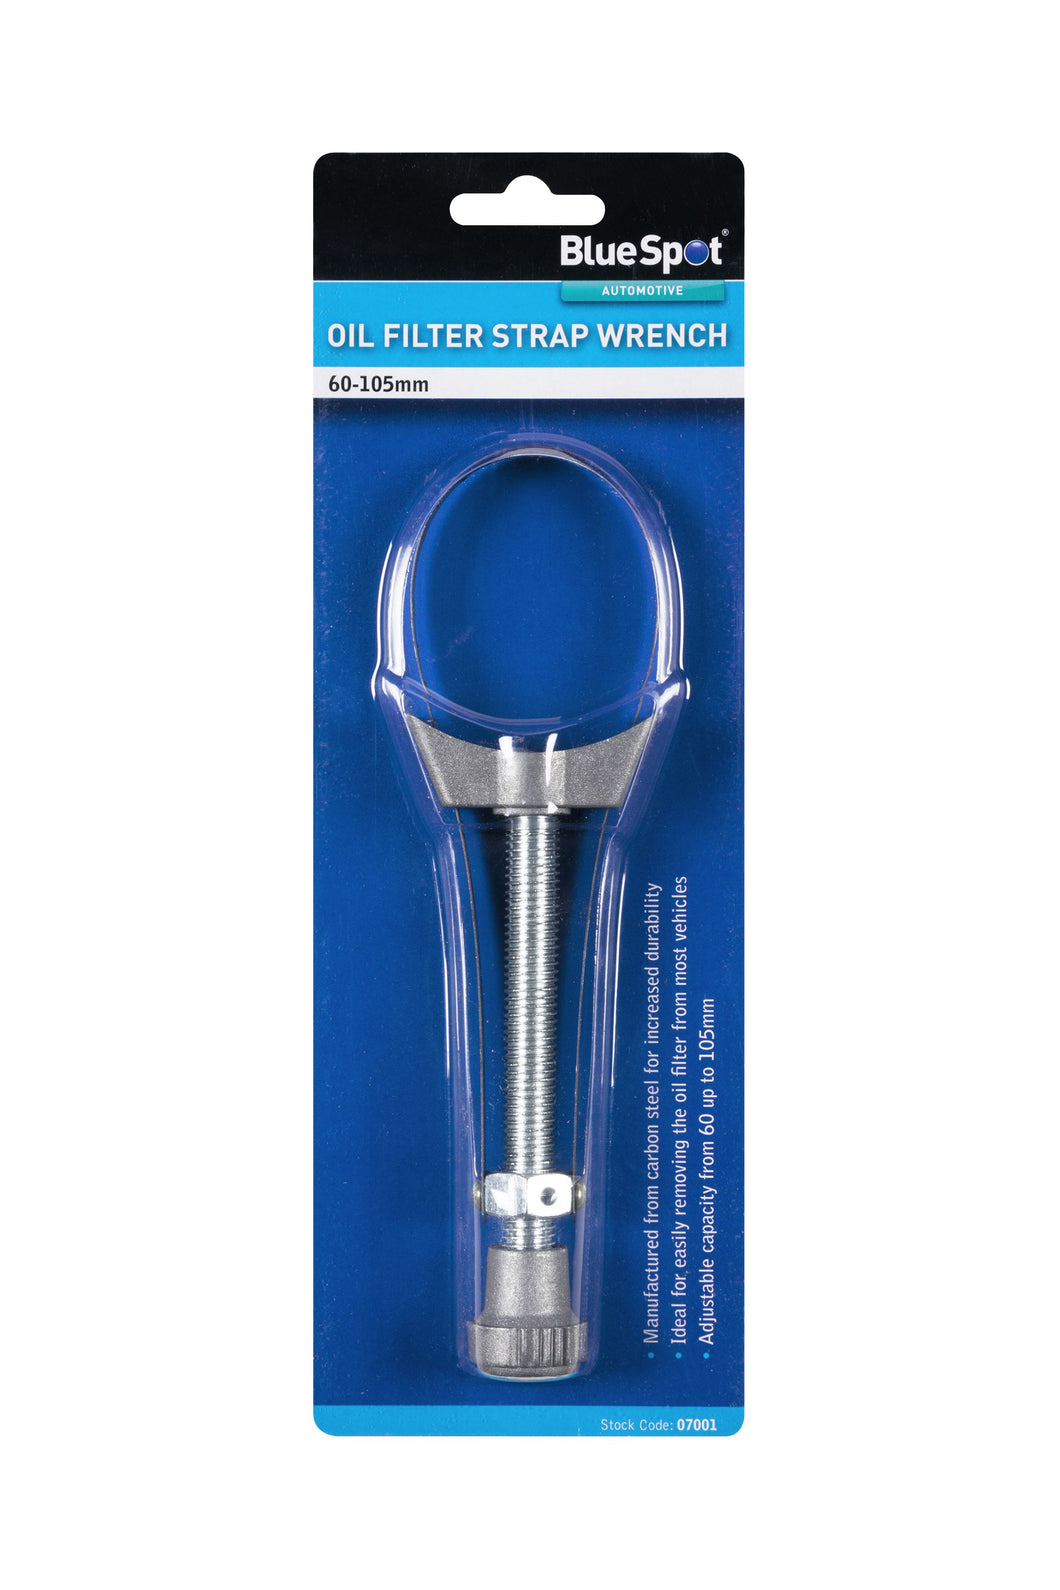 Blue Spot Oil Filter Strap Wrench (60-105mm)